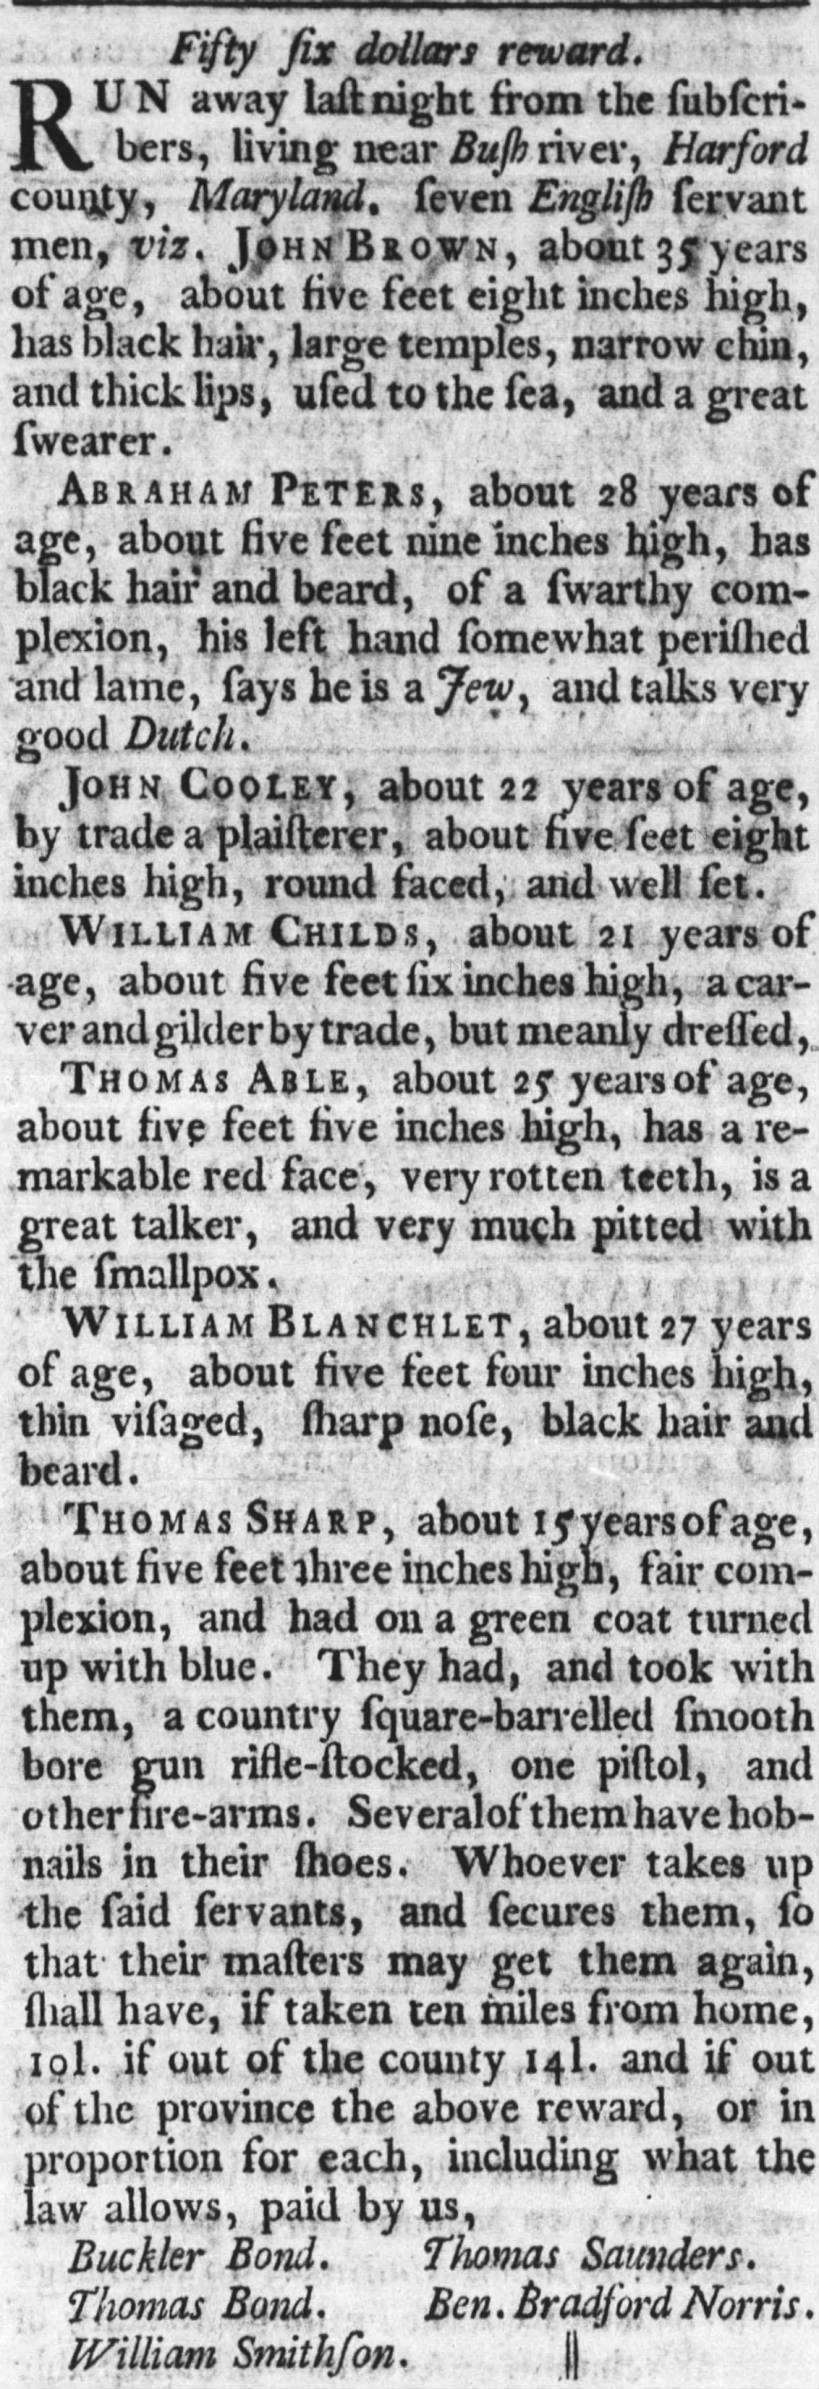 Purdie's Virginia Gazette
(Williamsburg, Virginia)
21 April 1775, page 3